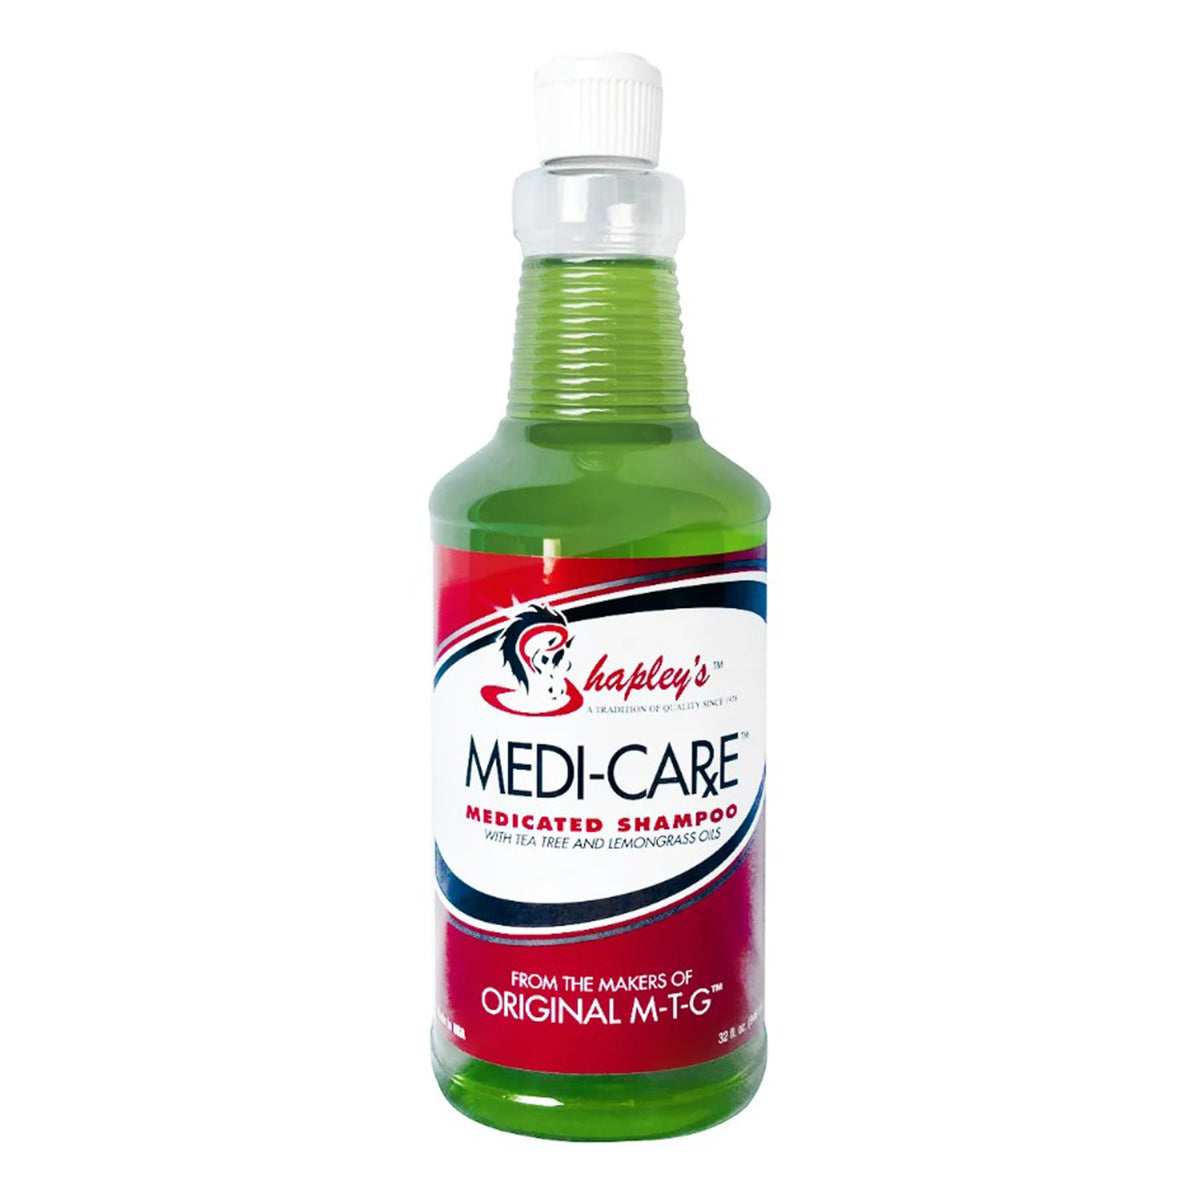 Medi-Care Medicated Horse Shampoo